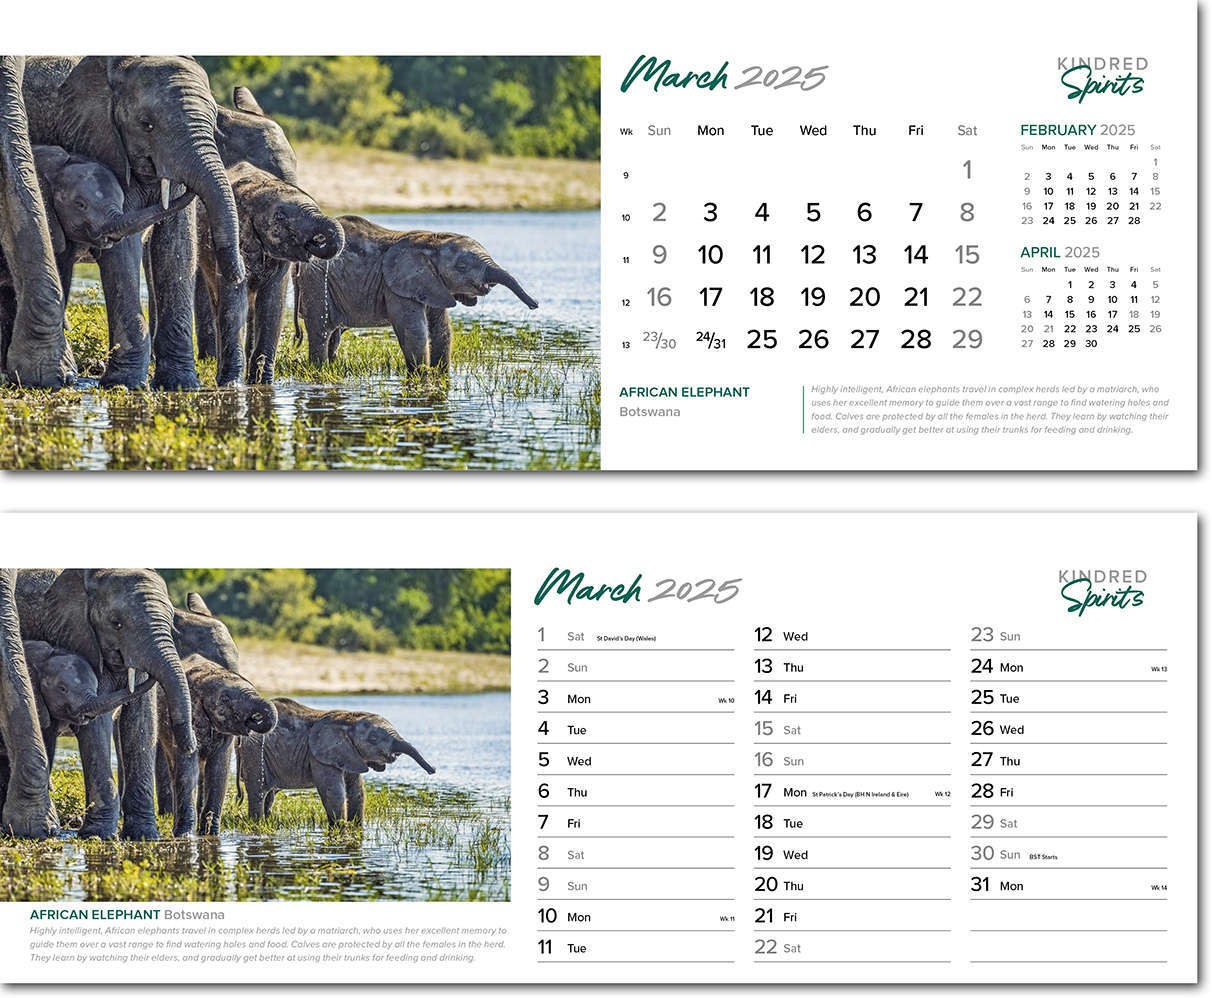 Kindred Spirits Premium Lined Easel Desk Calendar